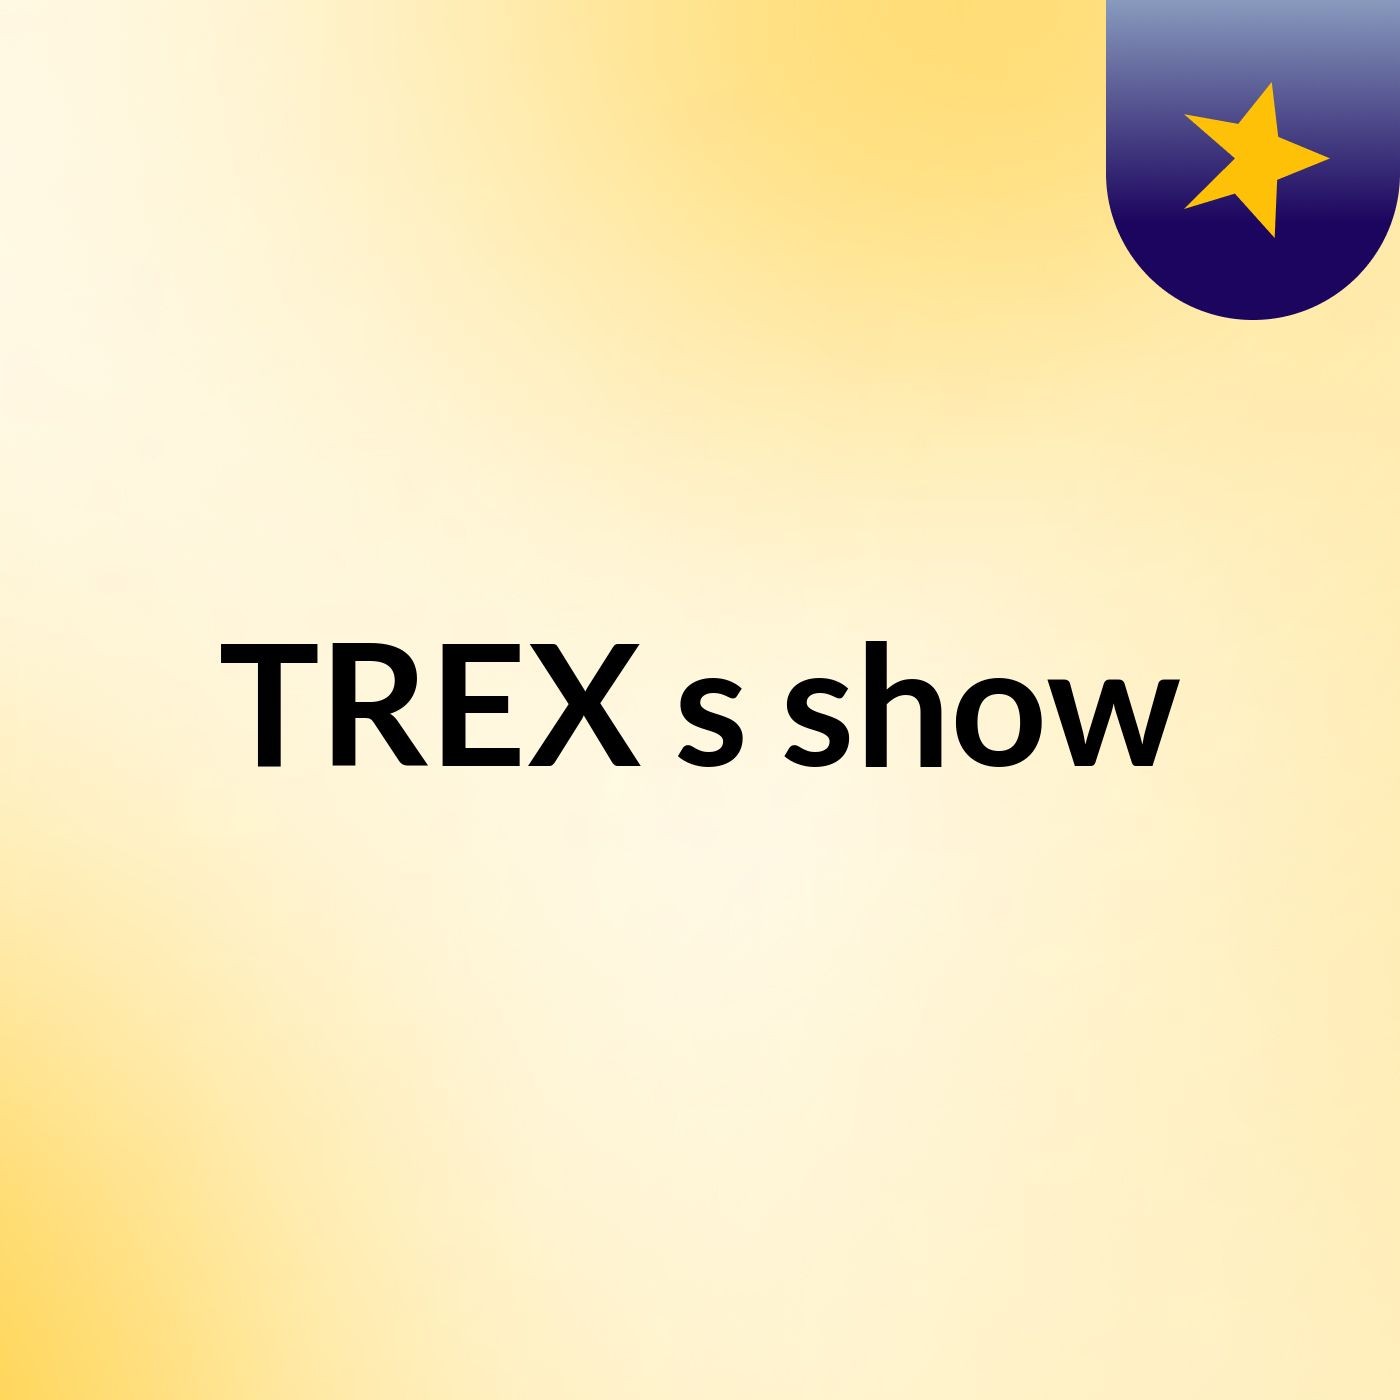 TREX's show